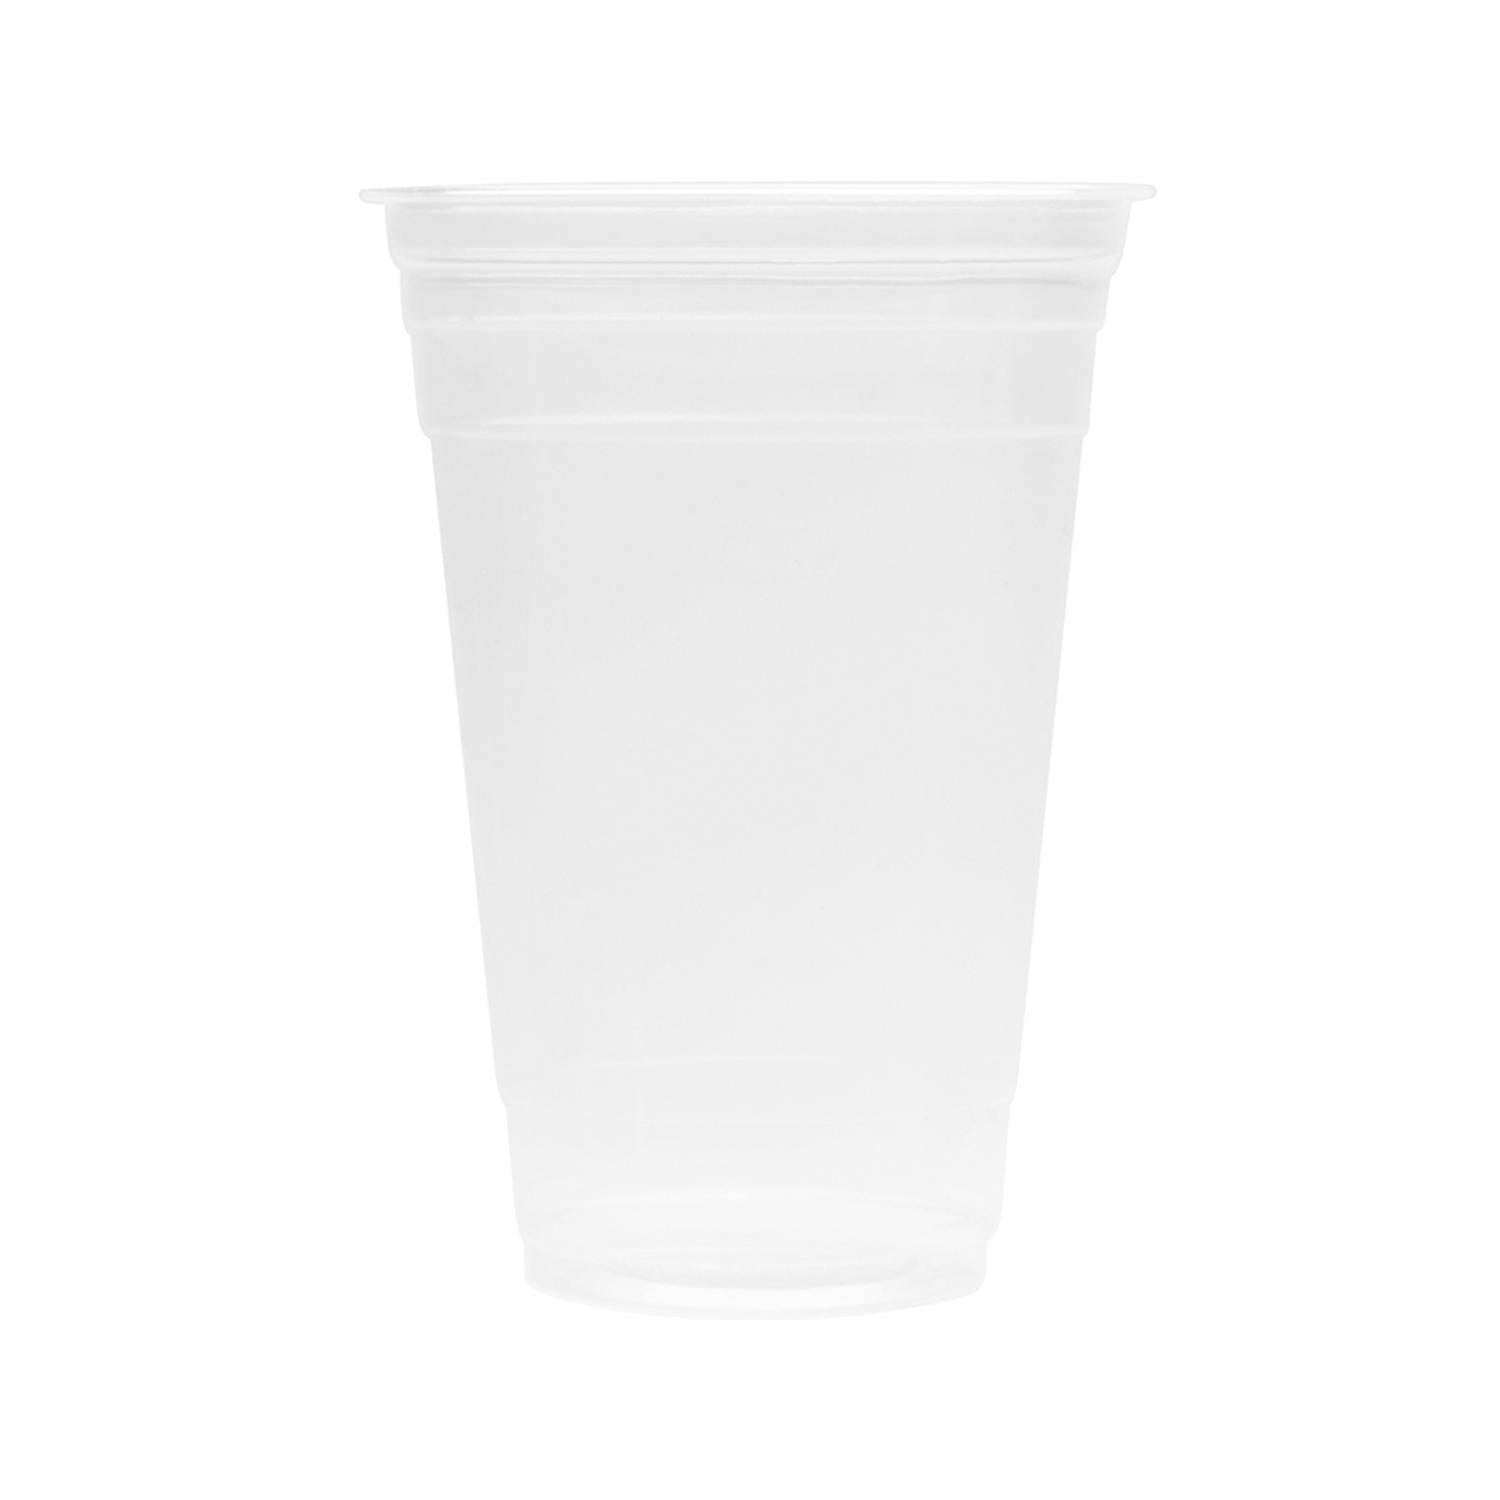 20 oz plastic cups